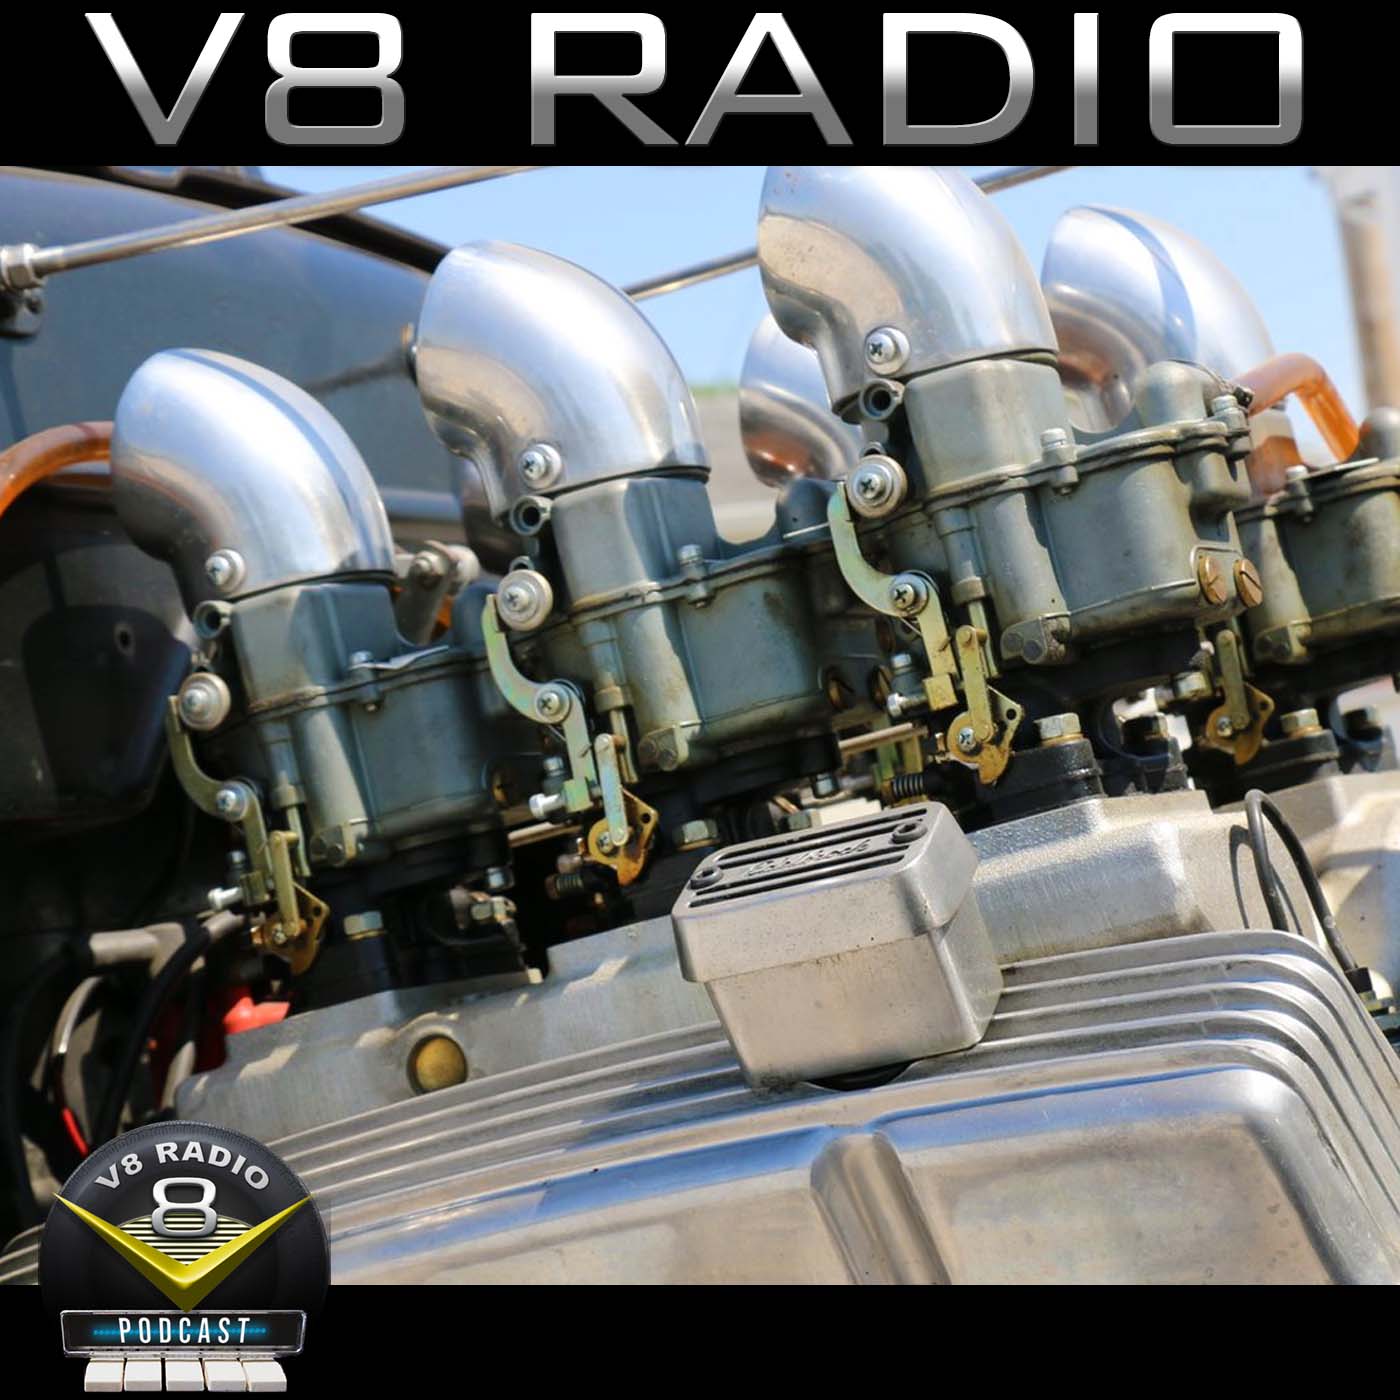 Aloha Q-Ball, Playlist Challenge, Radio Shows, Personal Growth, Automotive Trivia, and More on the V8 Radio Podcast!